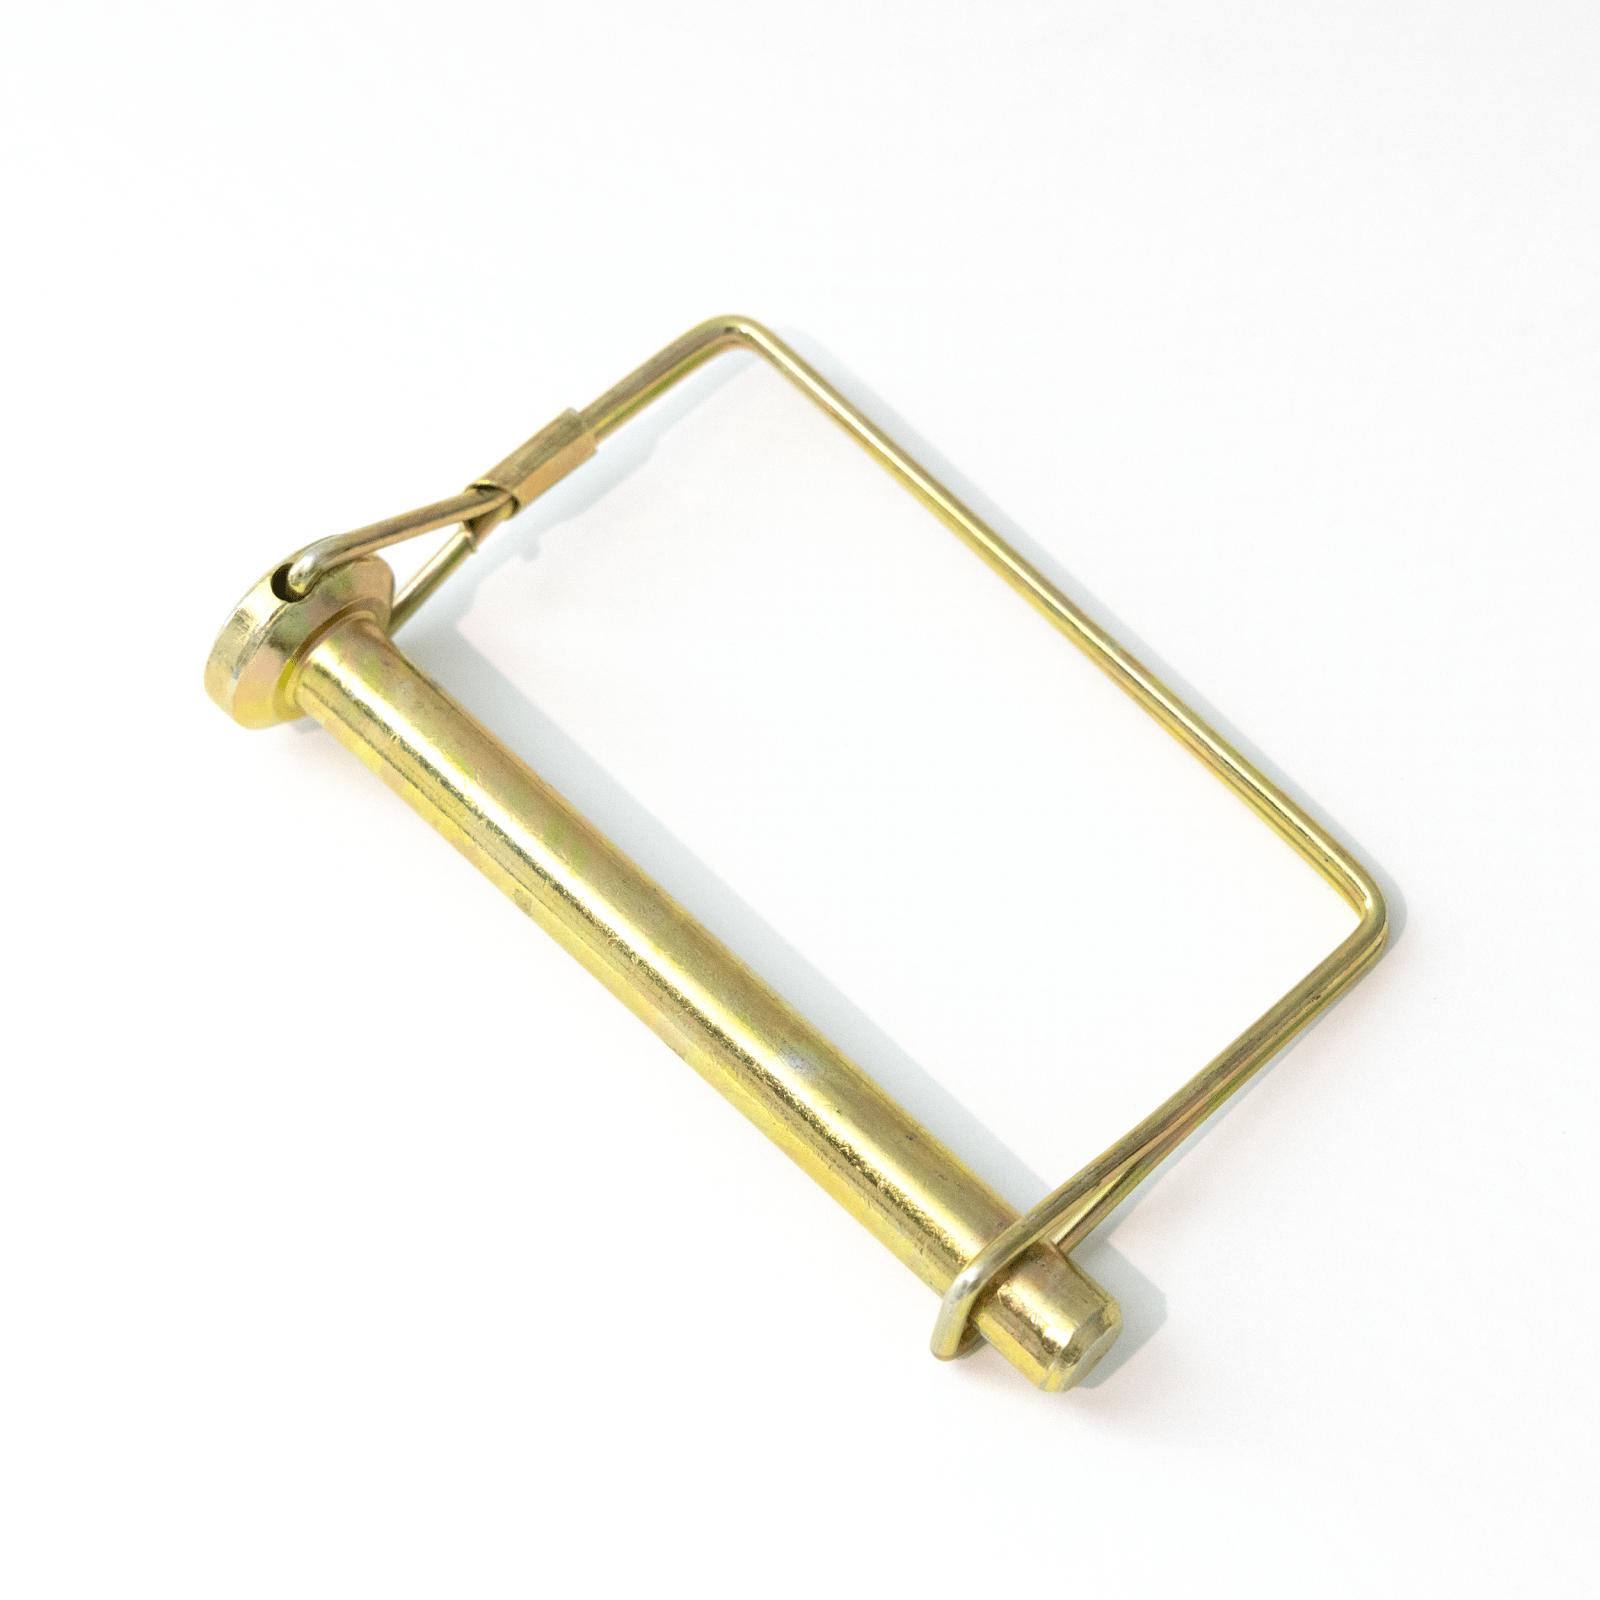 LS4 Snap Lock Pin Kit